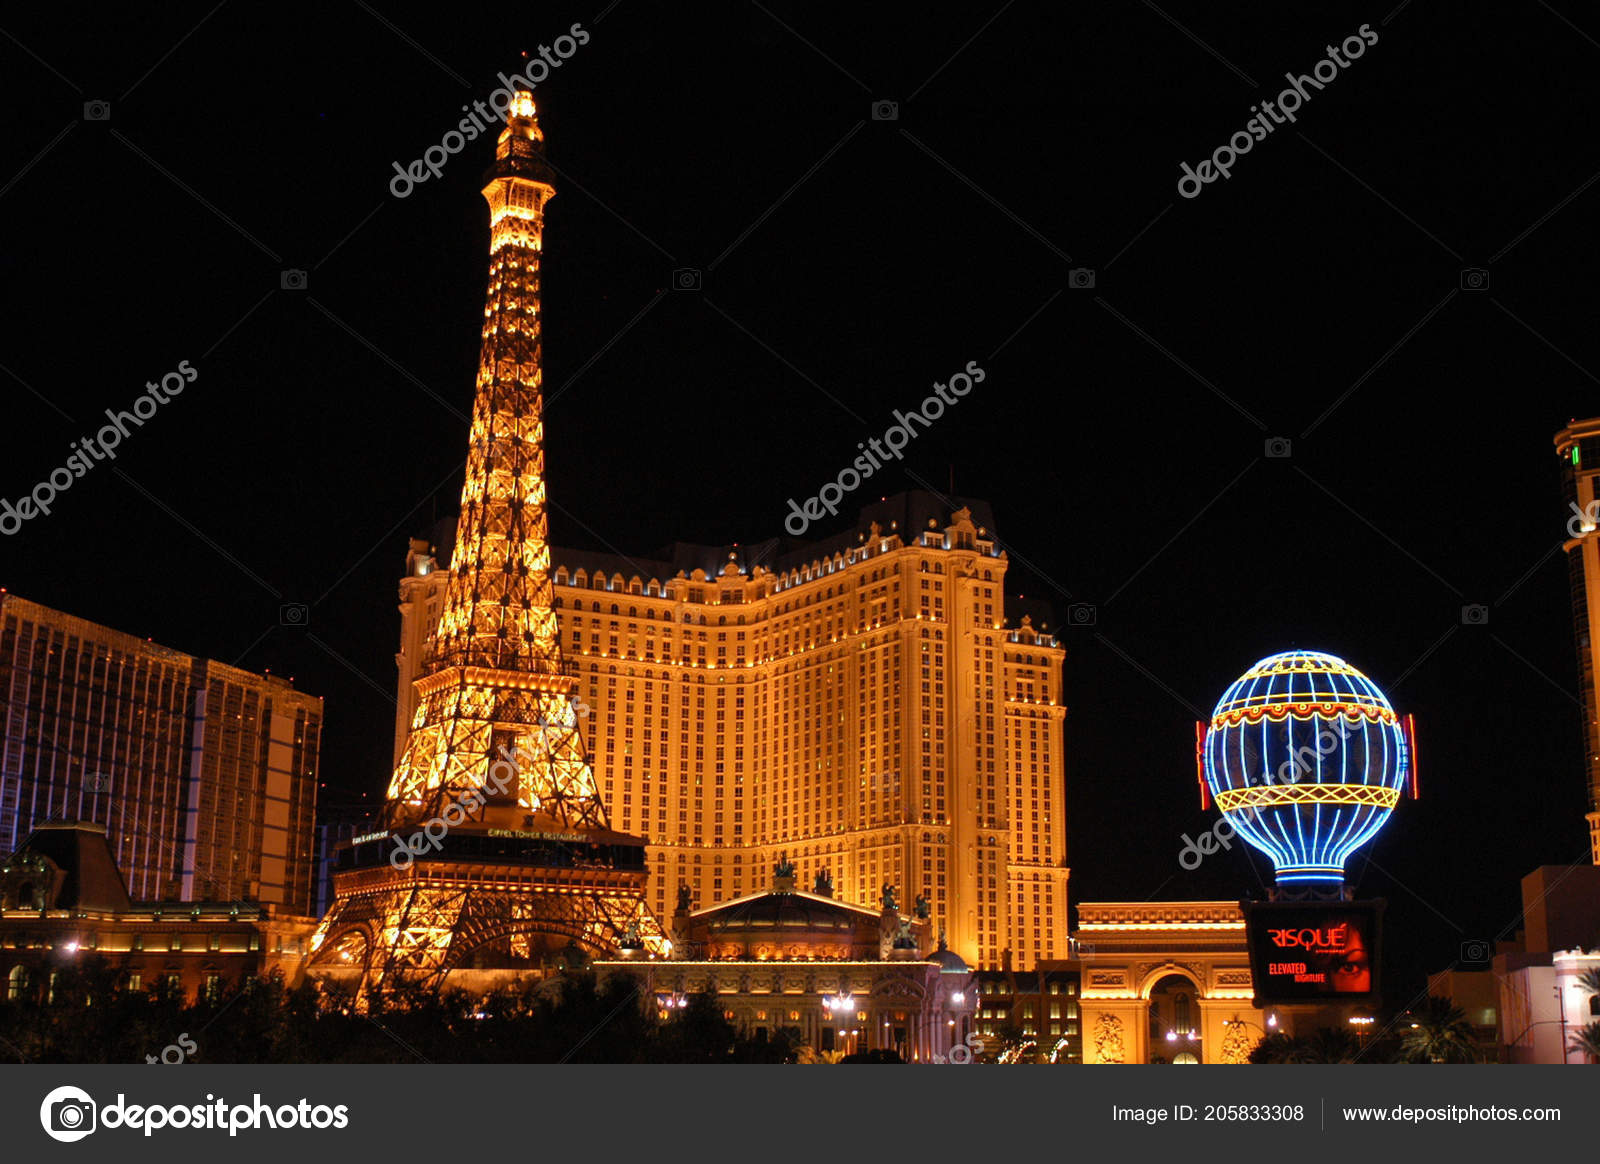 Hotel Paris - The Paris themed hotel of Las Vegas